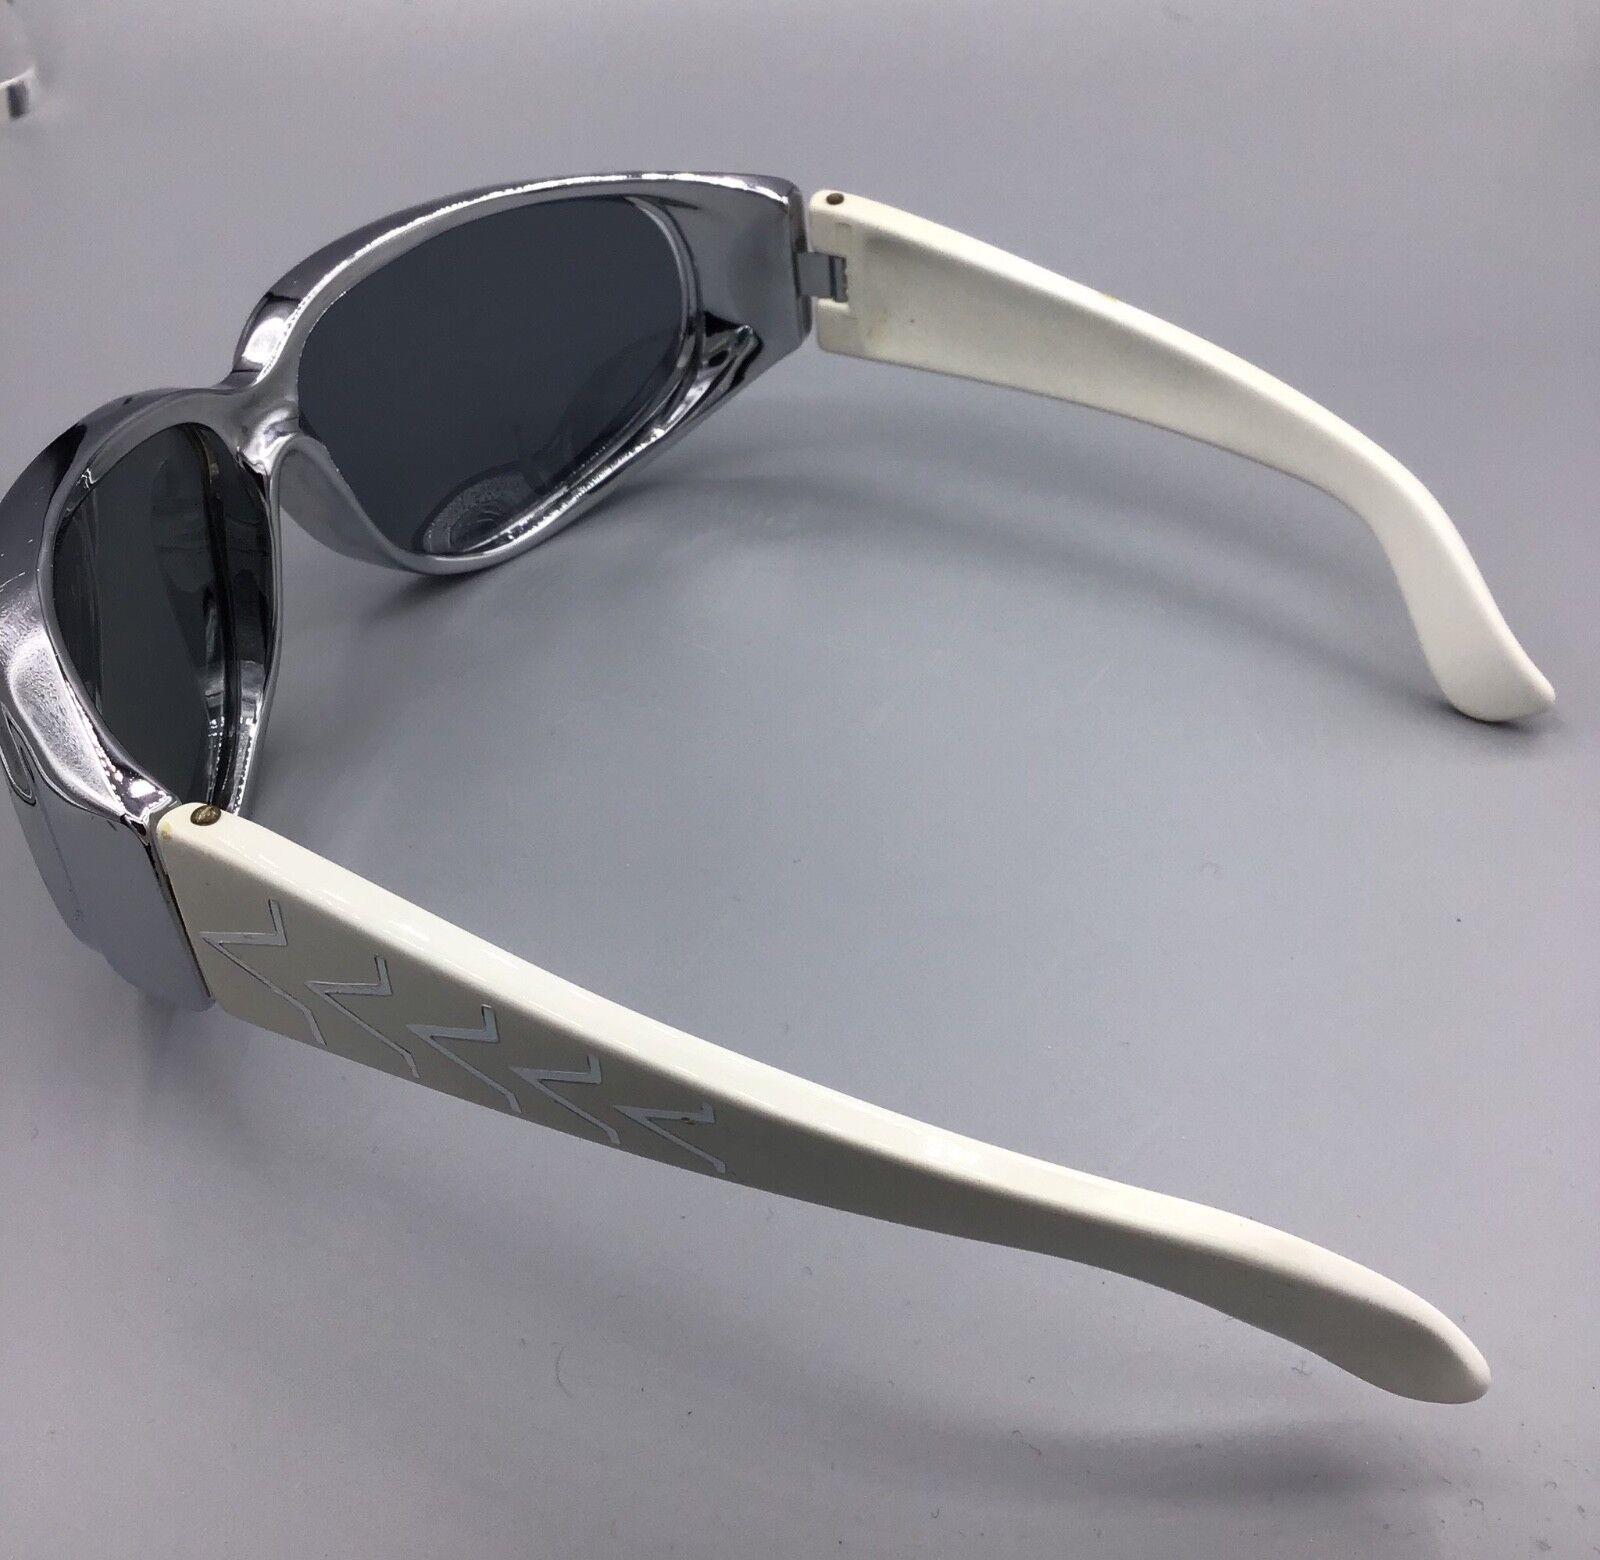 Occhiale vintage sunglasses da sole sonnenbrillen lunettes new old stock 60s